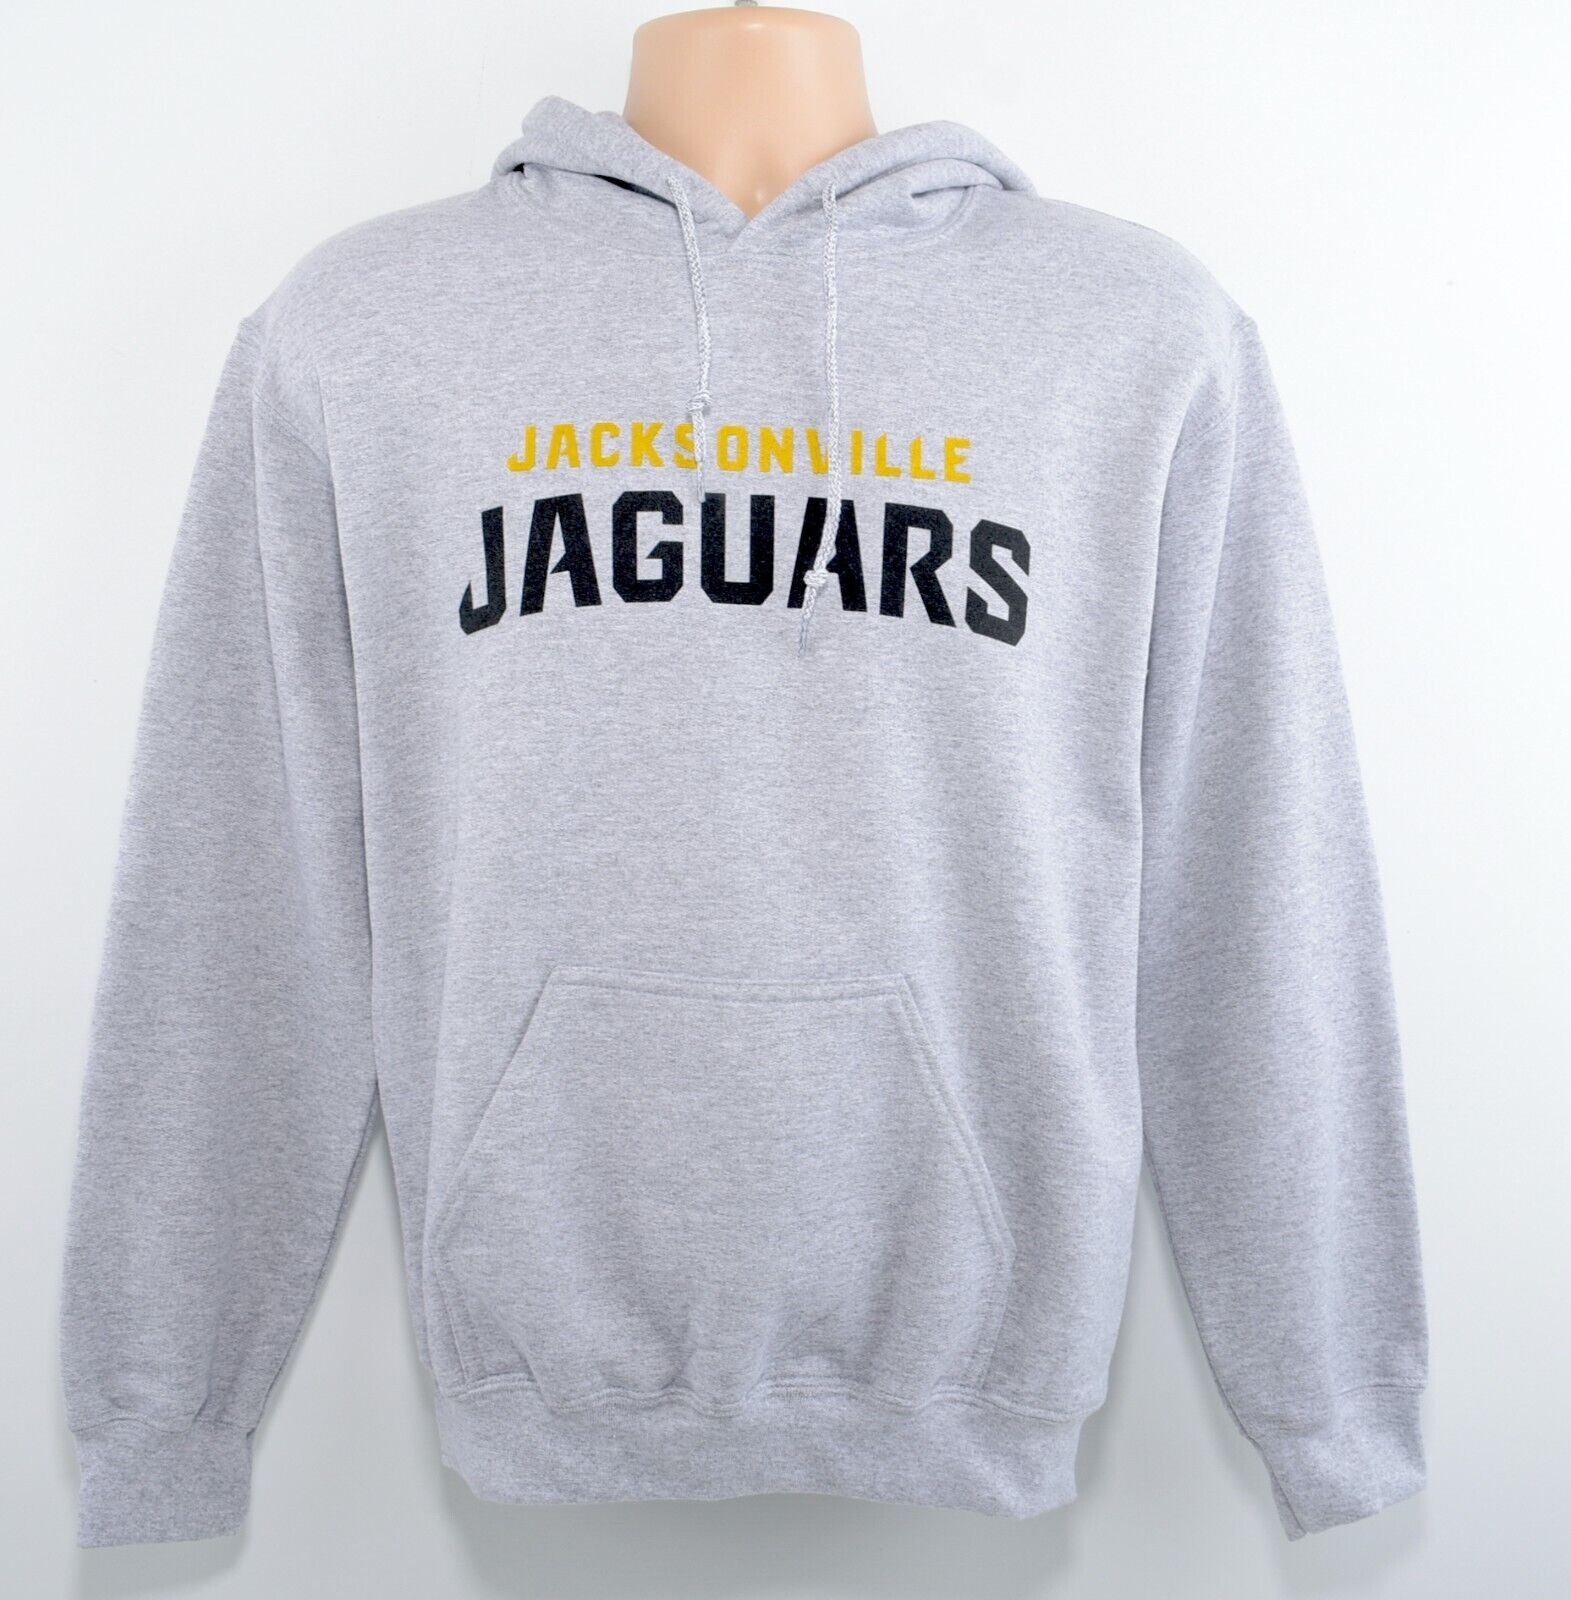 NFL Team Apparel Men's JACKSONVILLE JAGUARS Hoodie Sweatshirt, Grey, size S